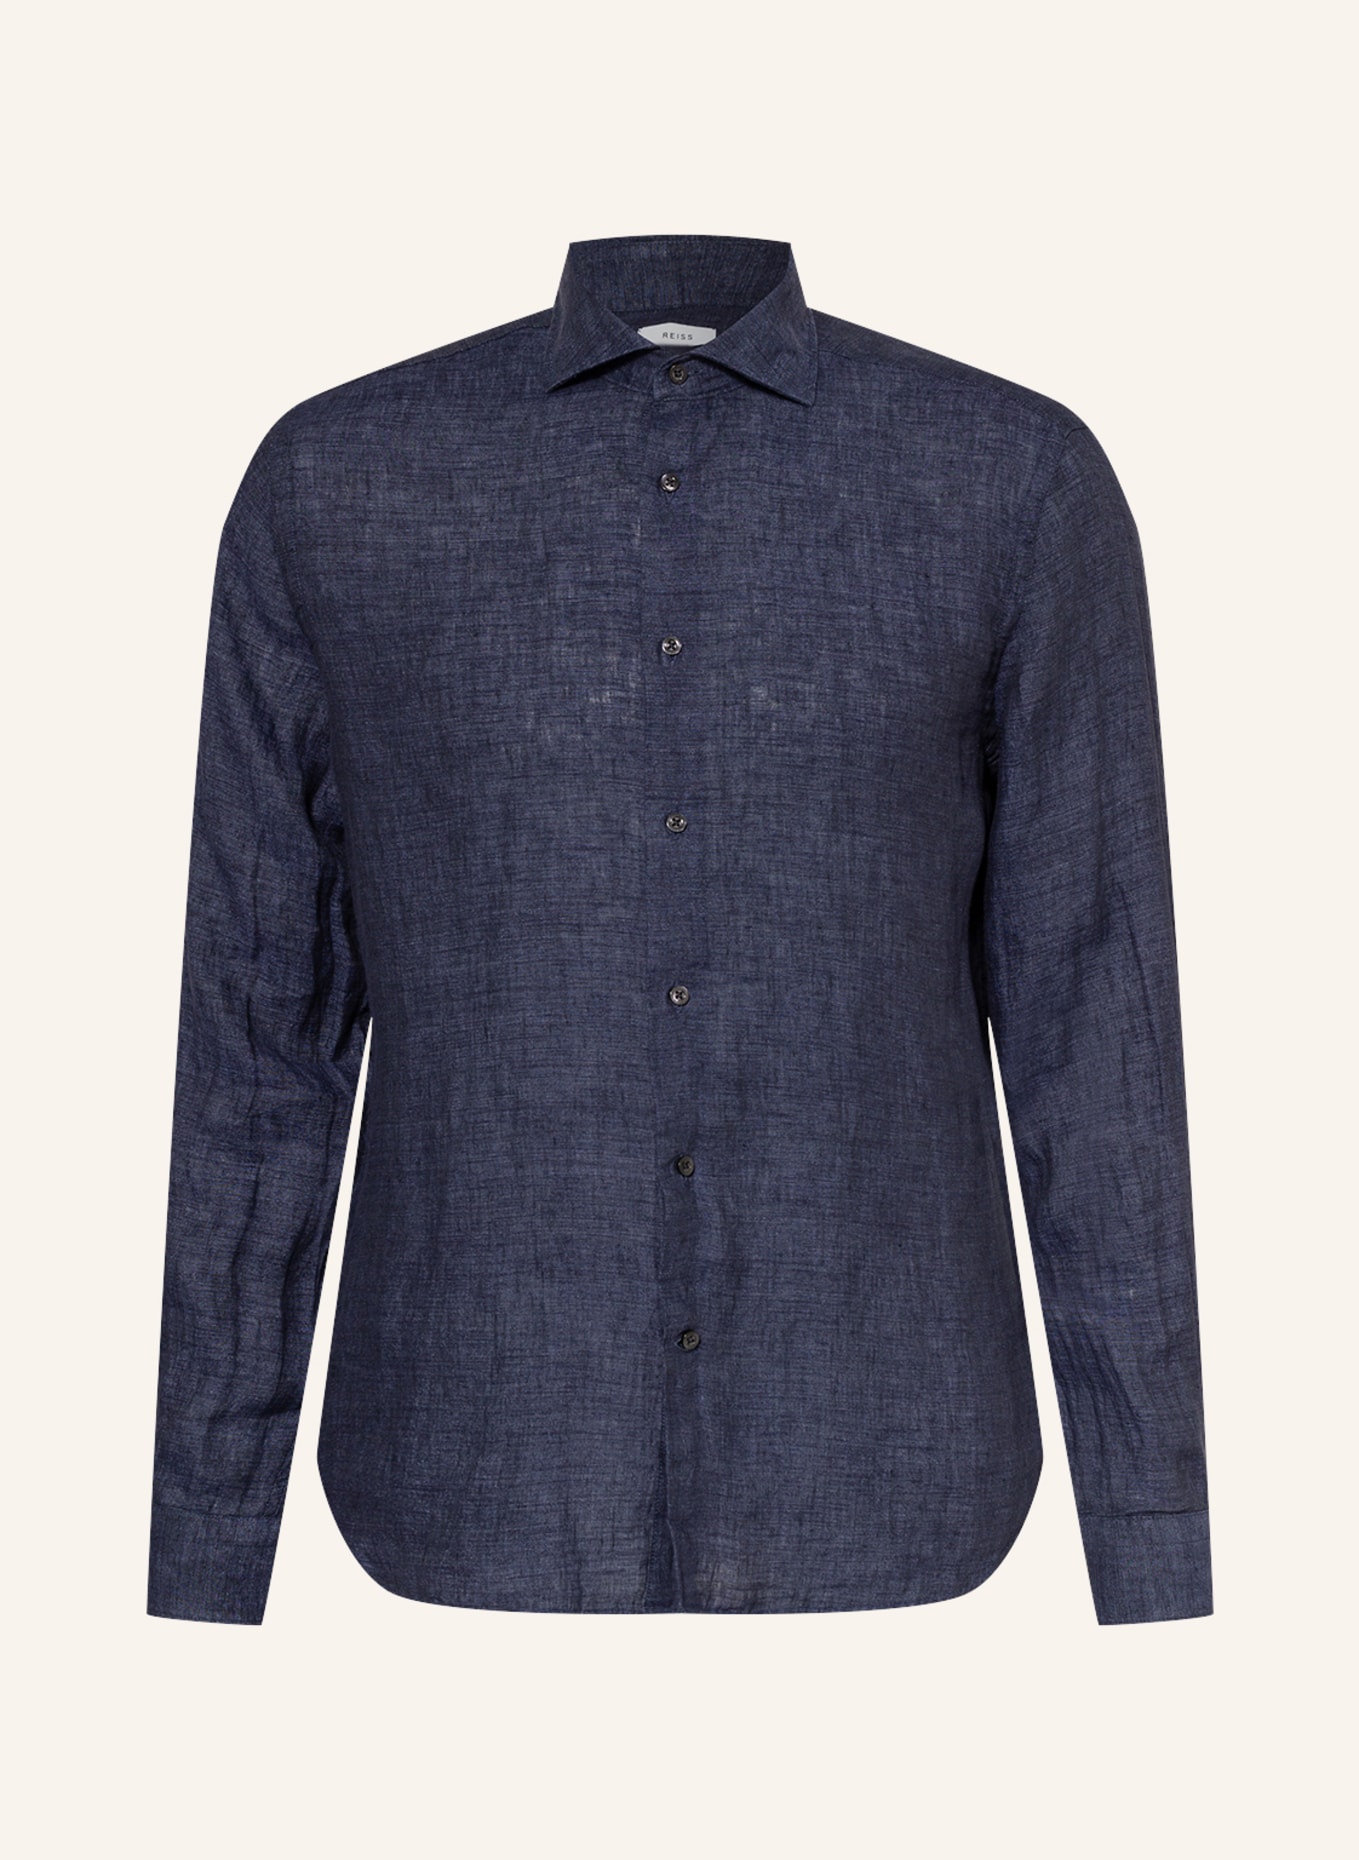 Рубашка REISS LeinenRUBAN Regular Fit, темно-синий рубашка strokesman s regular fit темно синий